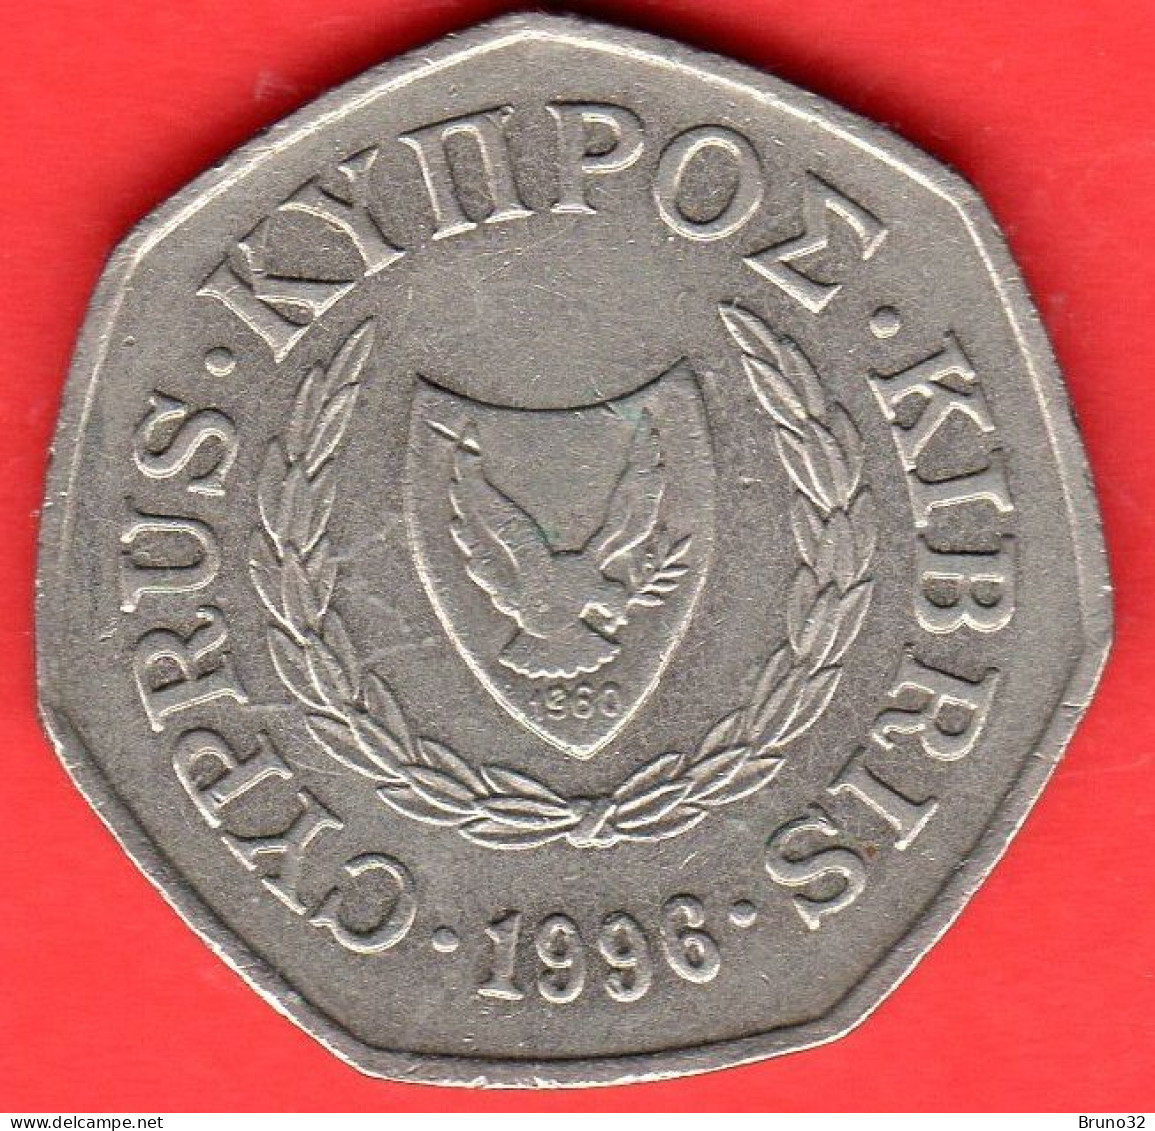 Cipro - Chyprus - Kıbrıs - Chypre - 1996 - 50 Cents - SPL/XF - Come Da Foto - Chypre